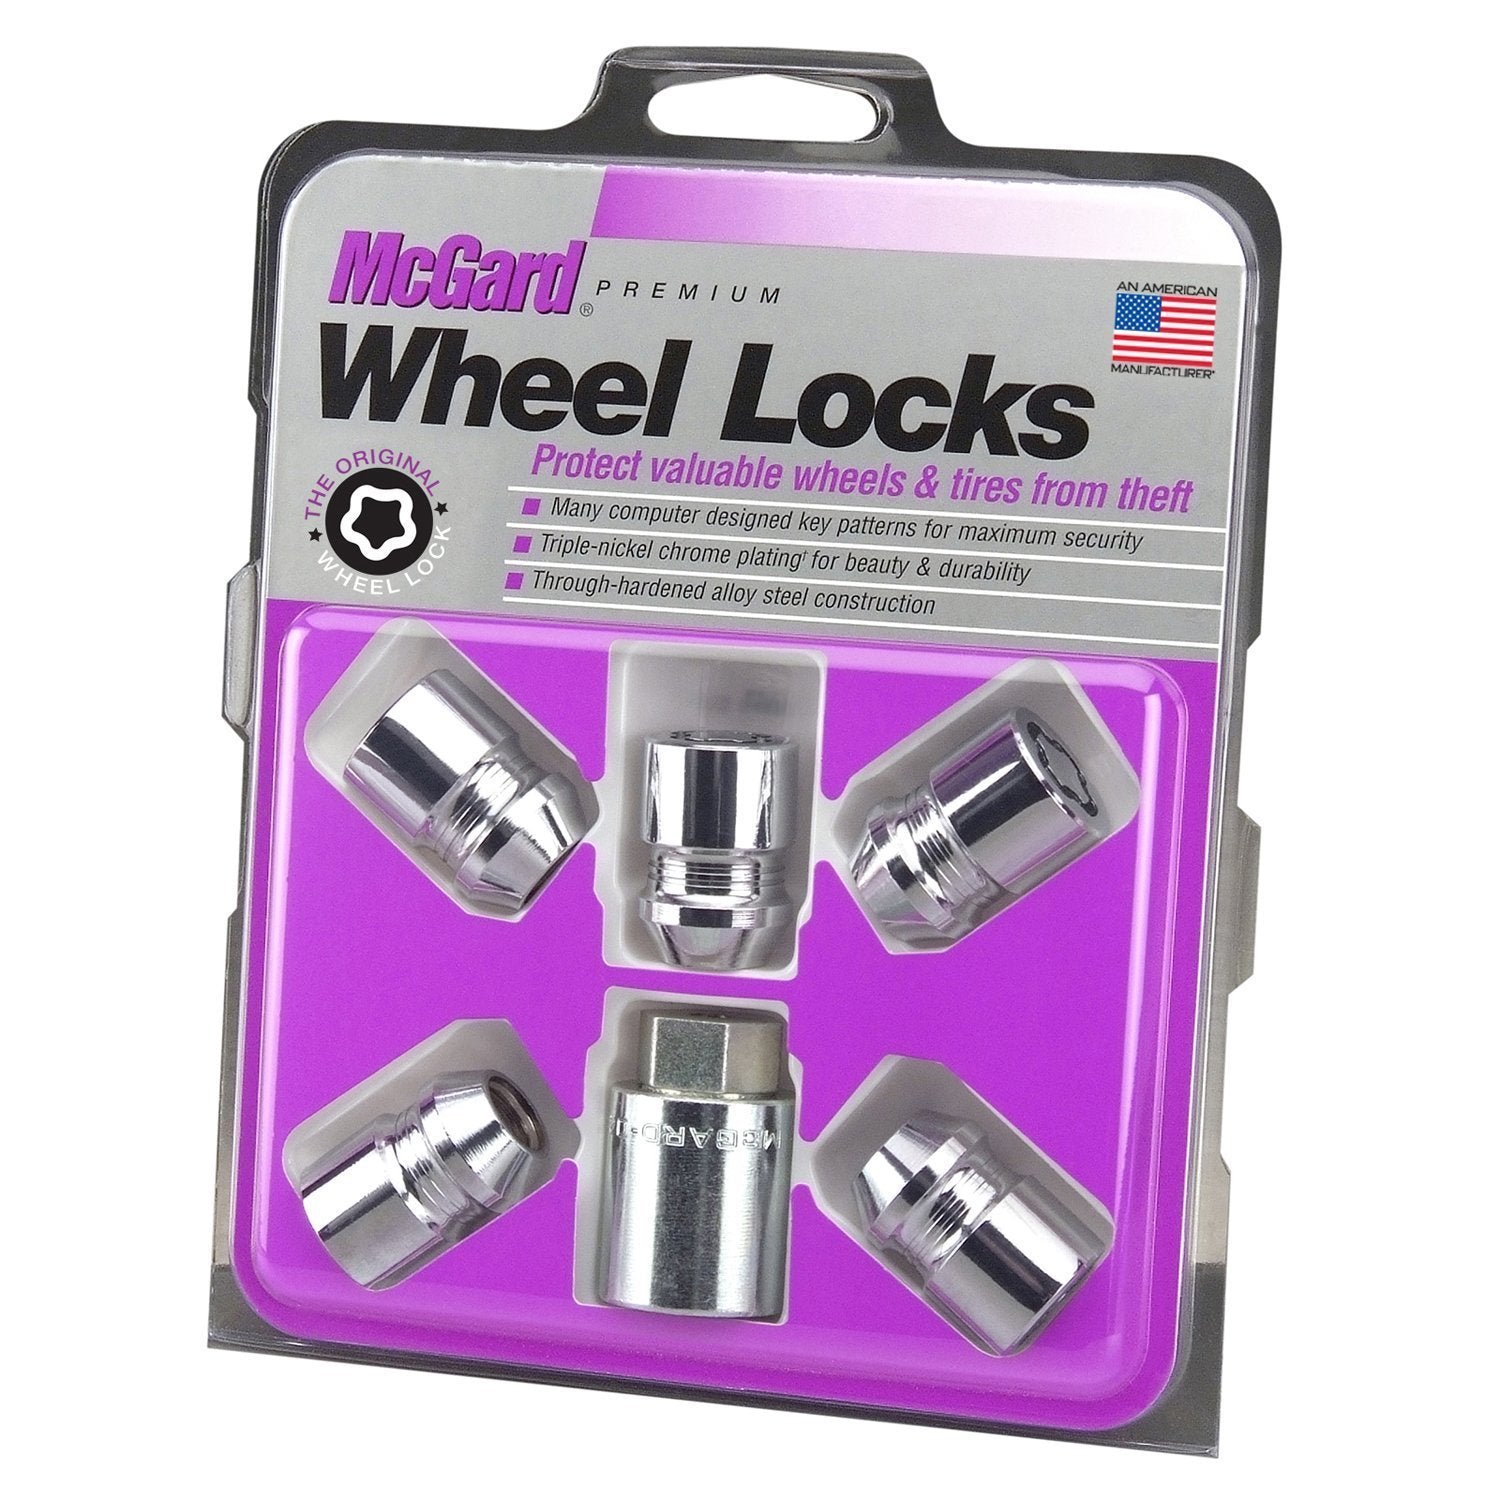 McGard, McGard Cone Seat Exposed Style Wheel Locks / Chrome / 5 Lock Set (24557)